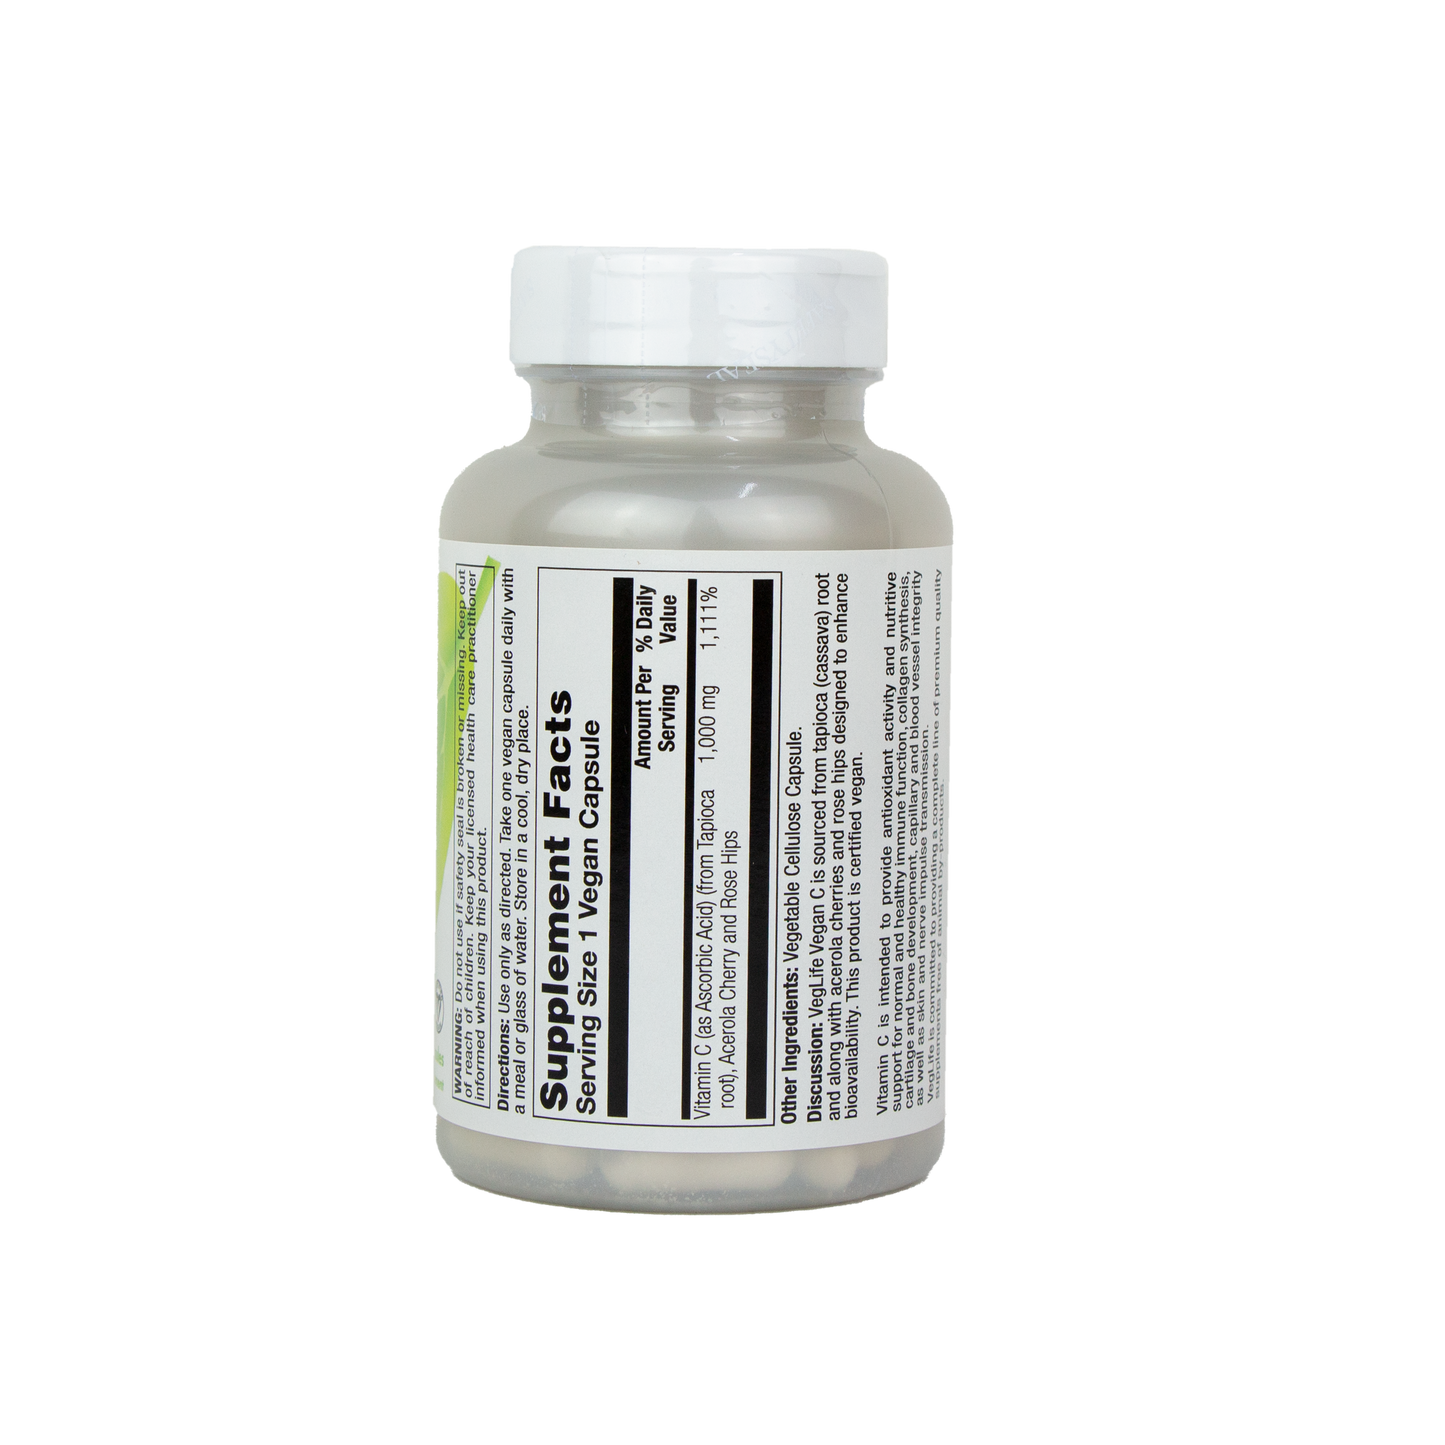 VegLife- Vegan Glucosamine Supreme